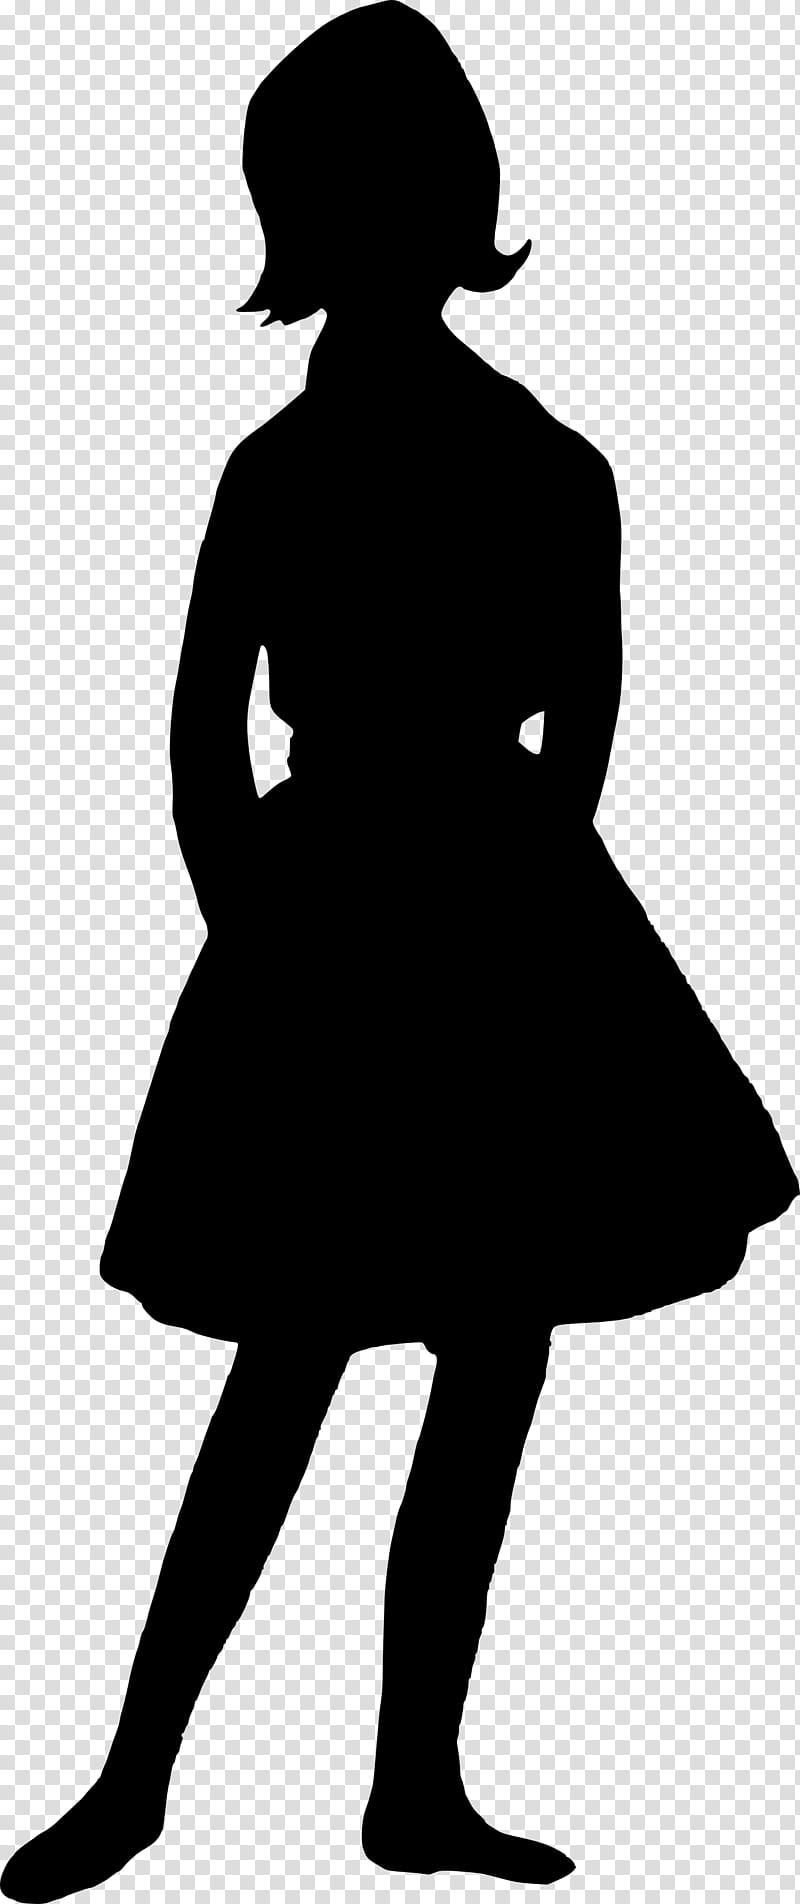 Little Girl, Silhouette, Woman, Human, Black, Standing, Blackandwhite, Dress transparent background PNG clipart